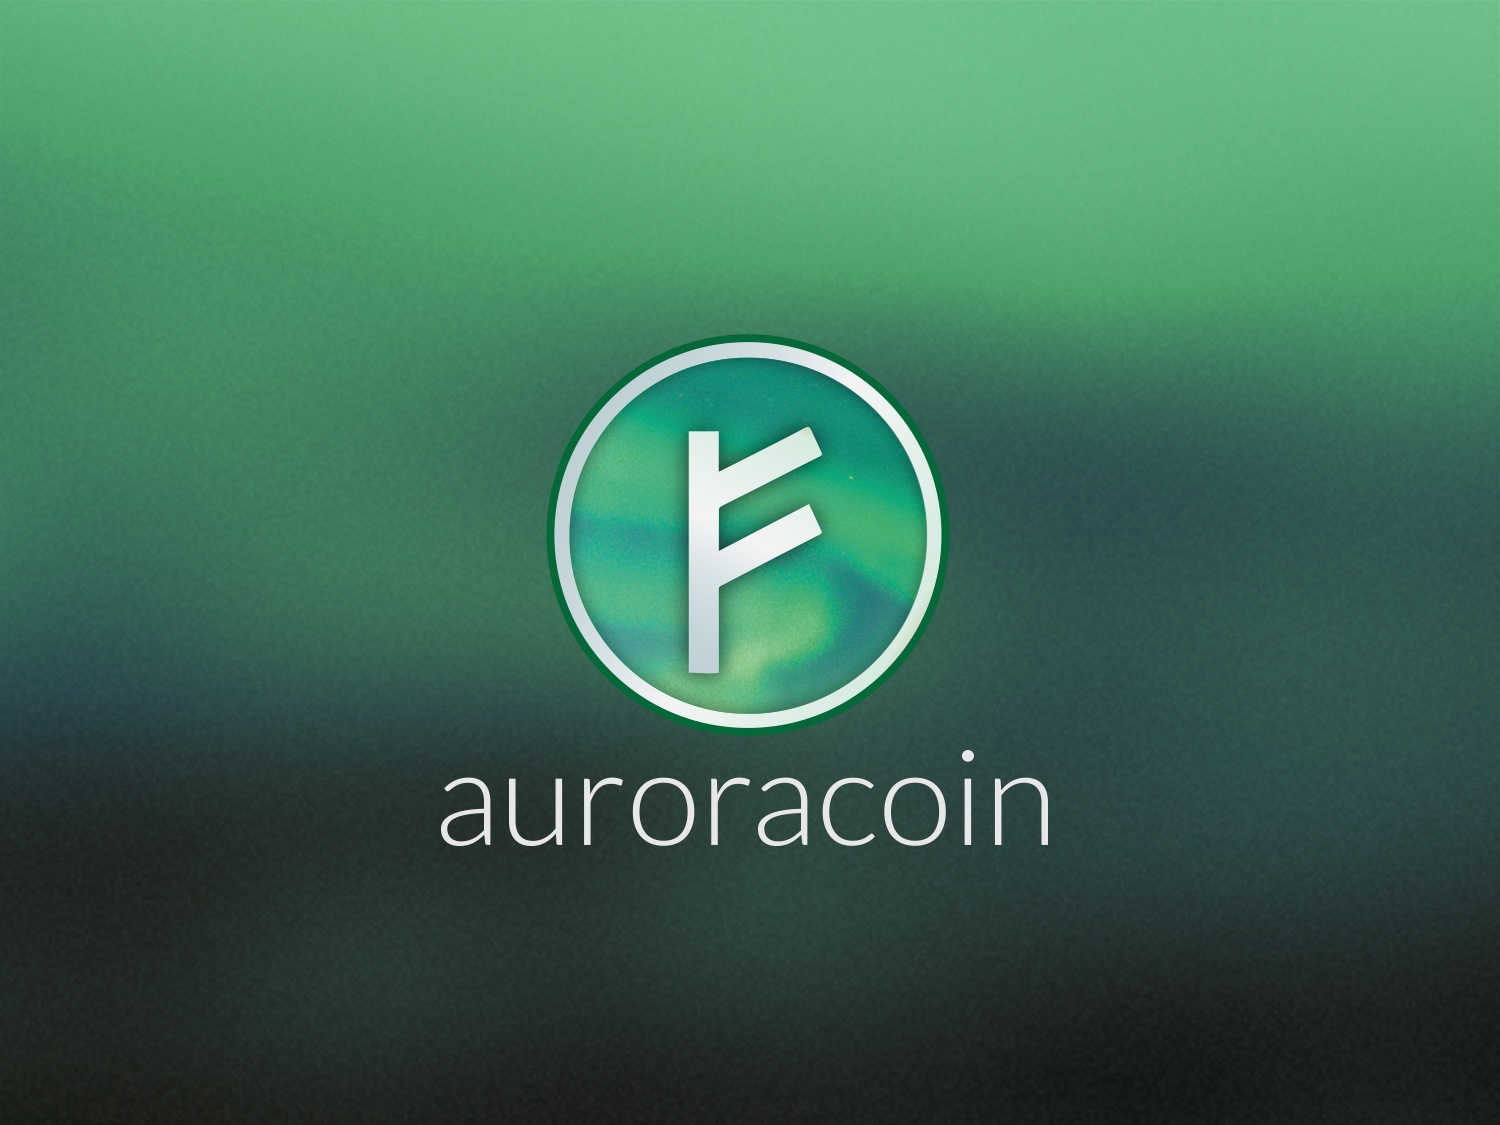 auroracoin logo